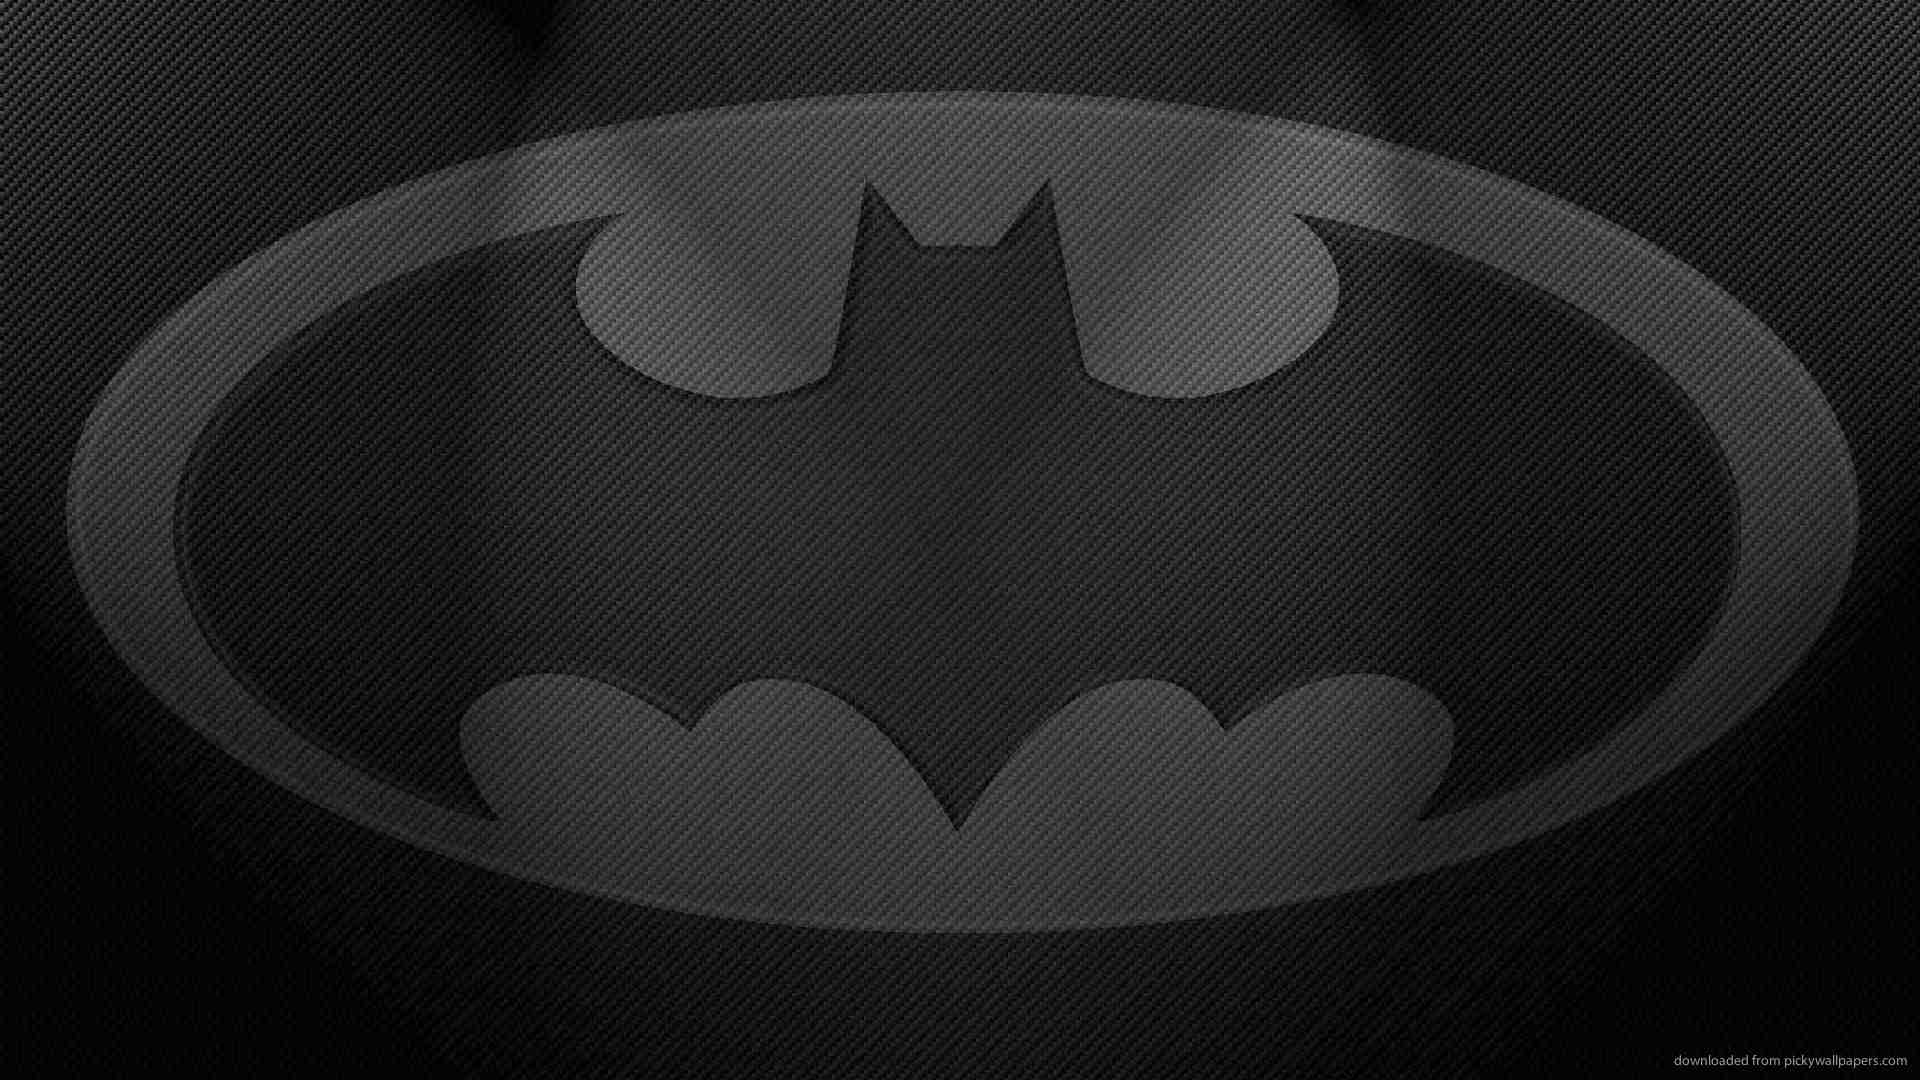 Batman logo wallpaper movies tvshows   986115